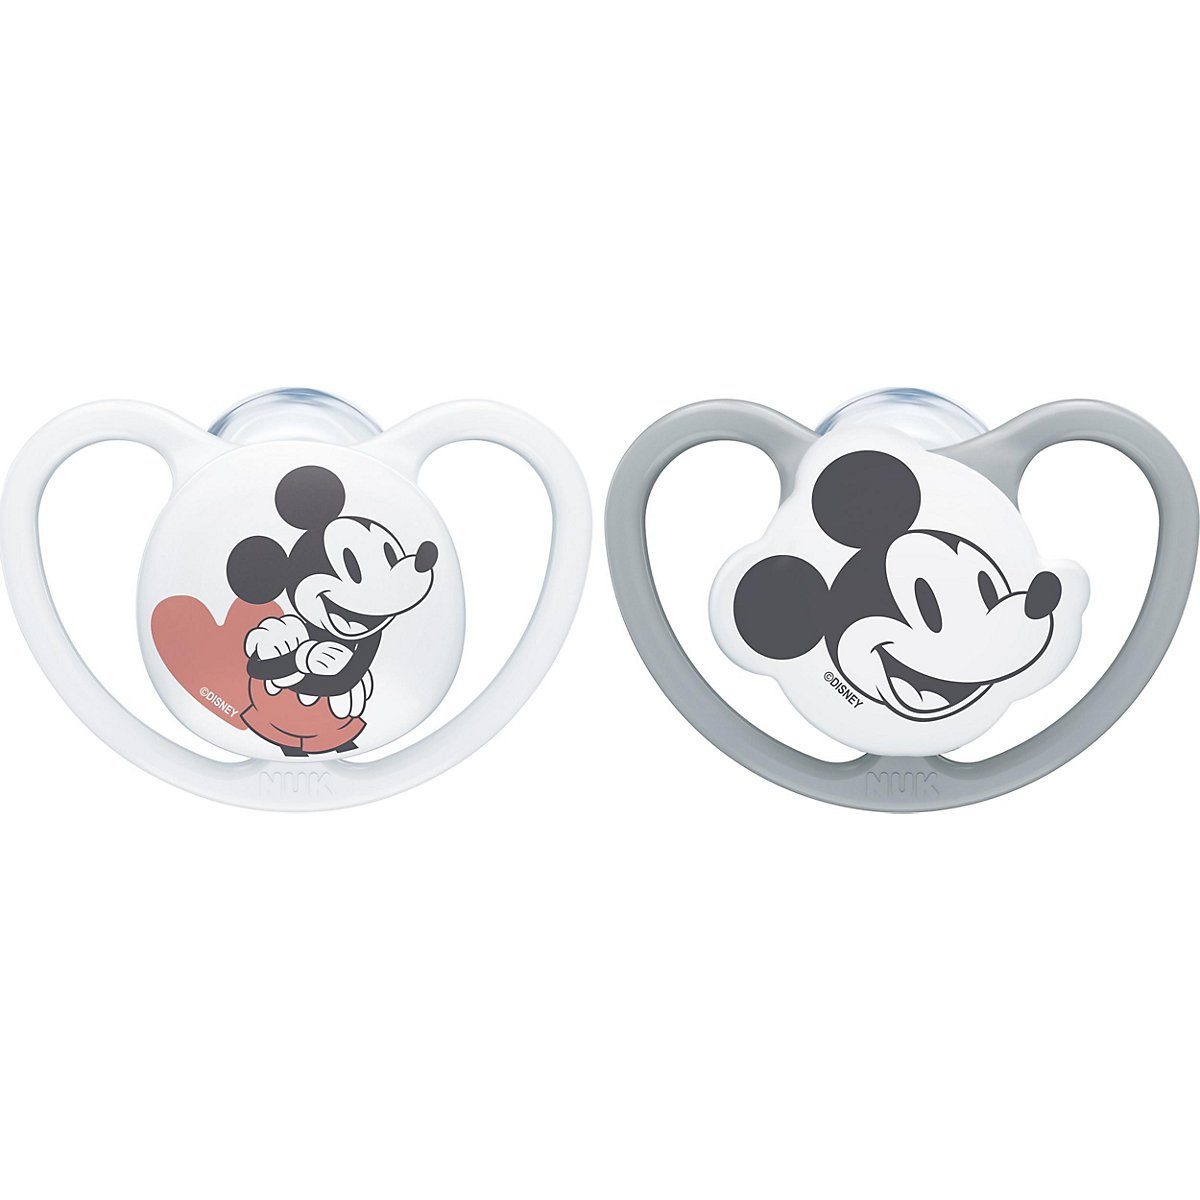 NUK Schnuller NUK Disney Minnie Mouse Space Silikon-Schnuller,  Altersempfehlung: ab 18 Monaten.